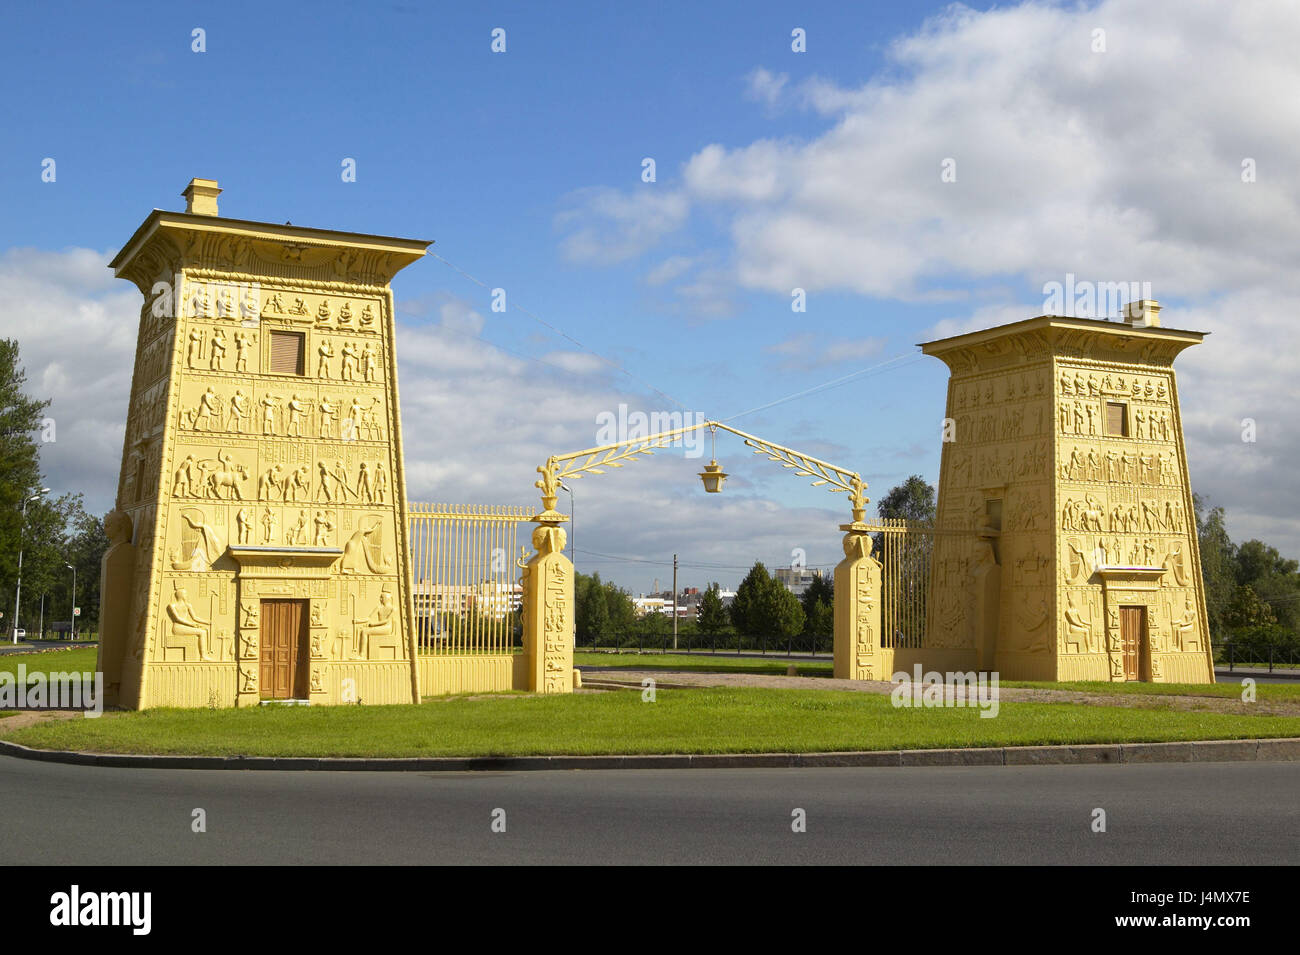 Russia, St. Petersburg, Egyptian gate, czar's village town, czar's bunk Selo, architecture, Egyptian, structure, pillars, gate, place of interest Stock Photo